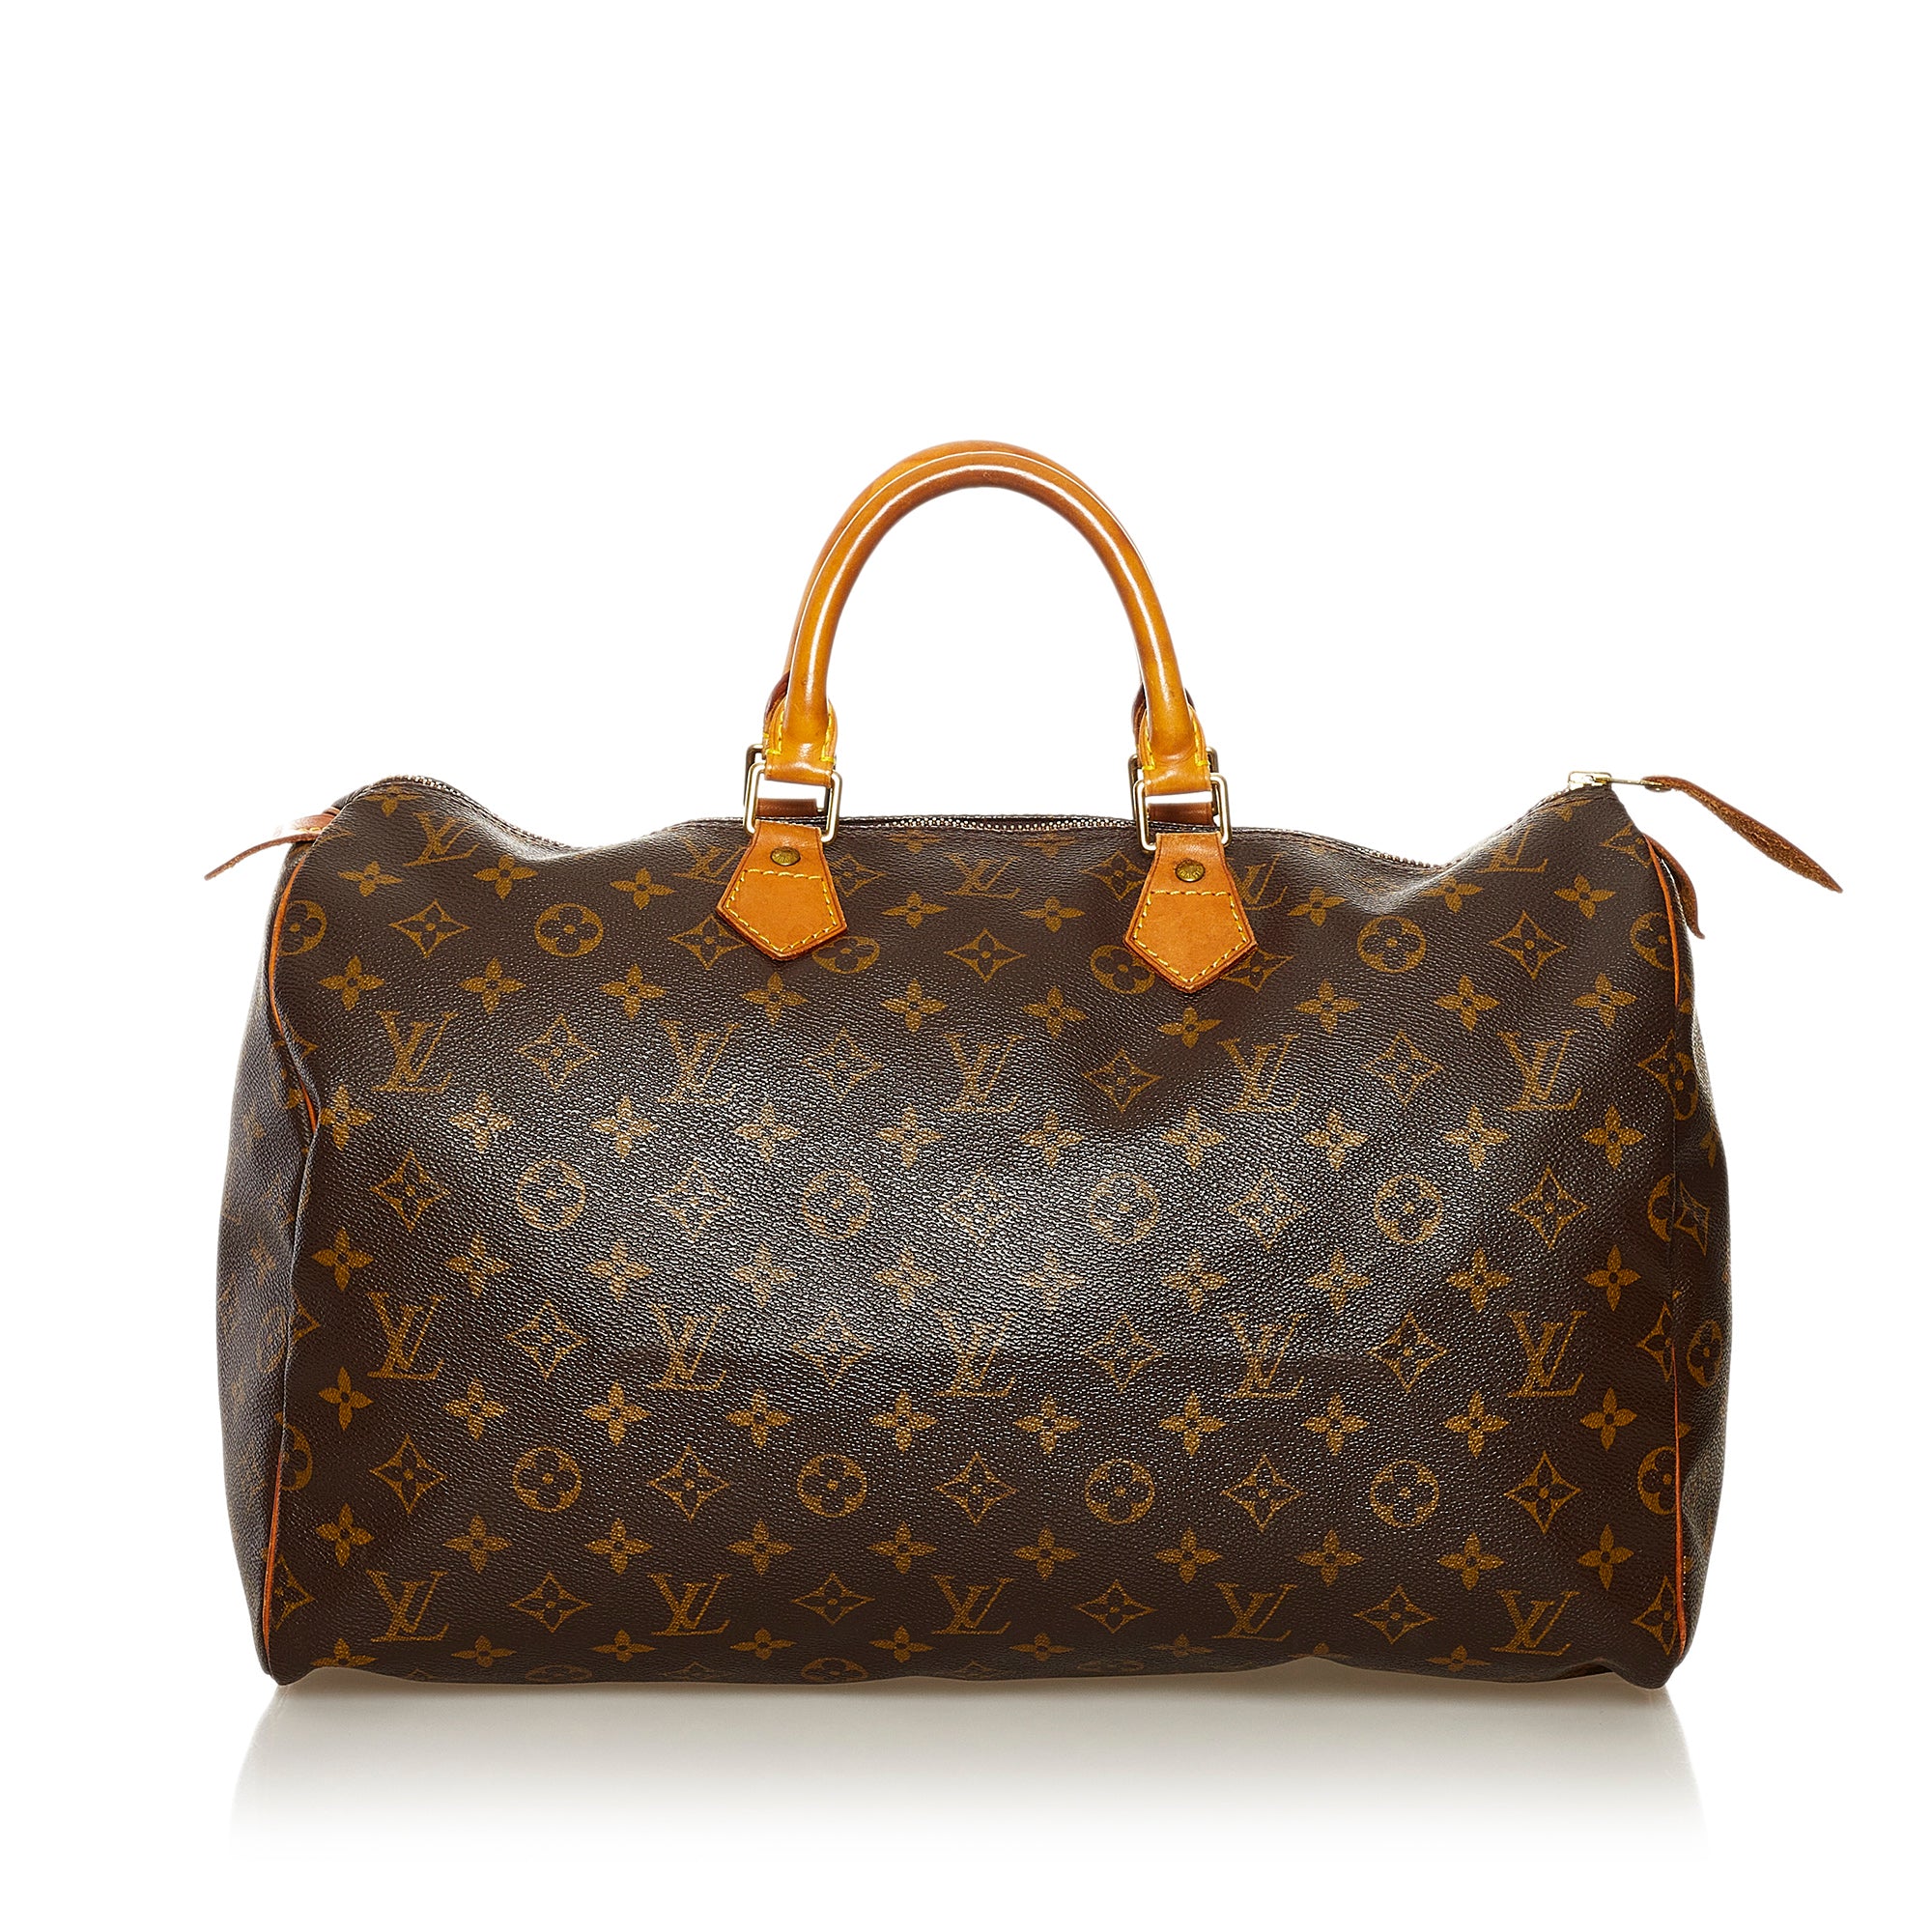 Louis Vuitton Speedy 25 Monogram Canvas Top Handle Bag on SALE